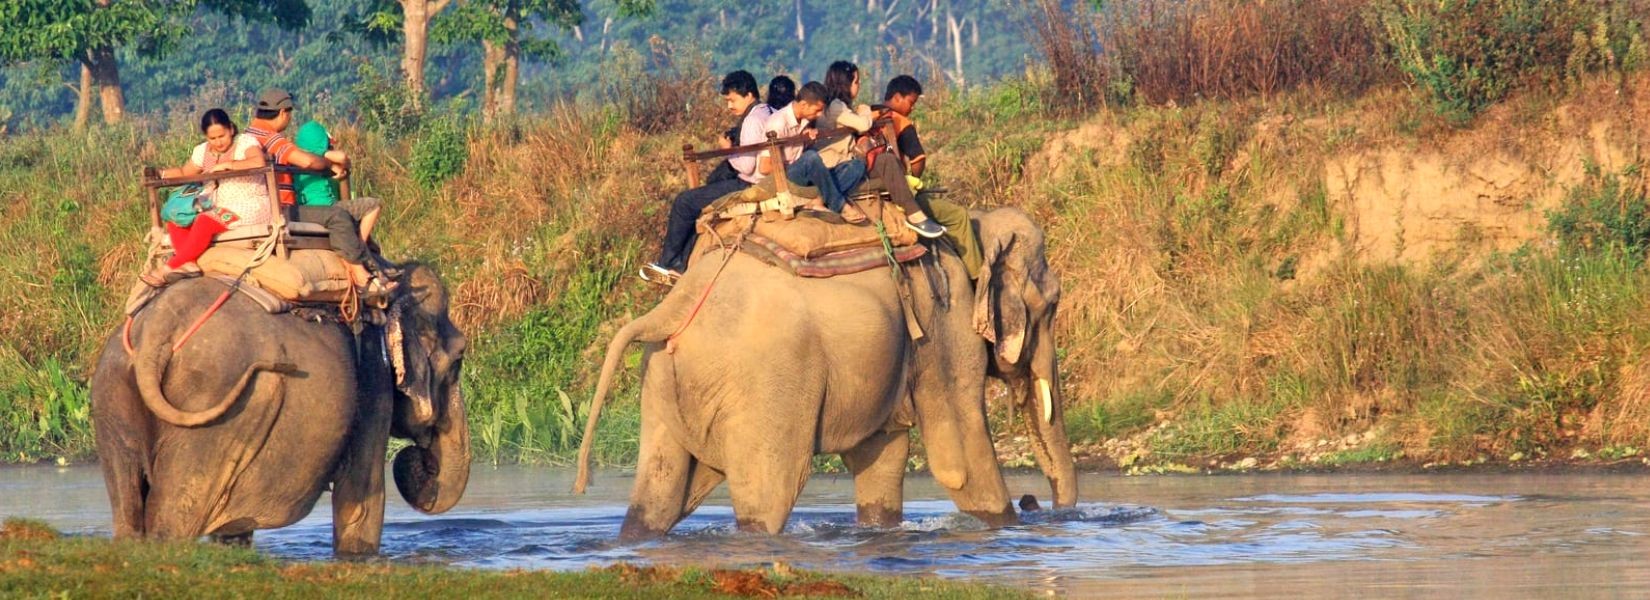 Jungle Safari in Chitwan